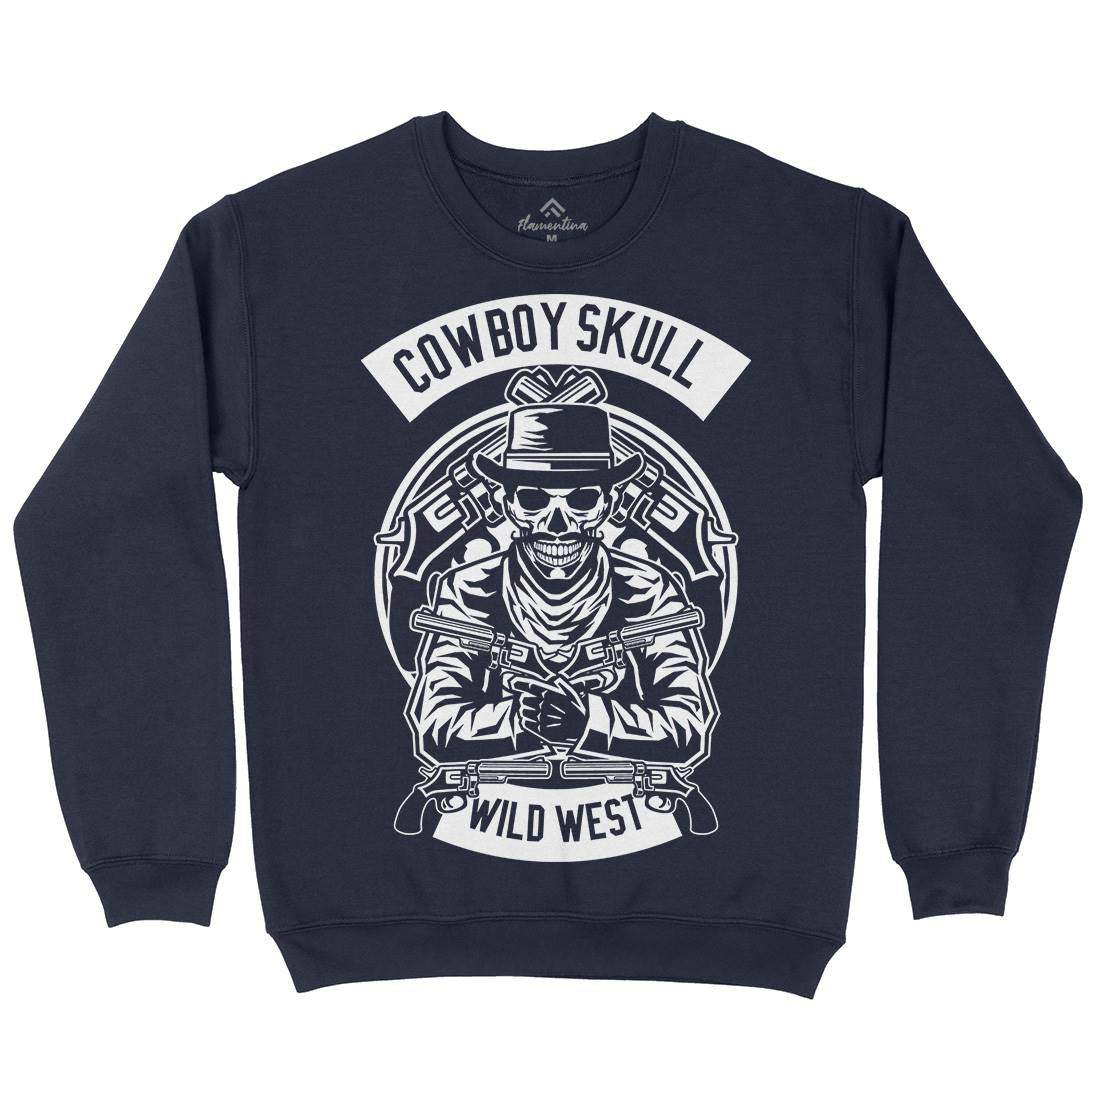 Cowboy Skull Kids Crew Neck Sweatshirt American B519